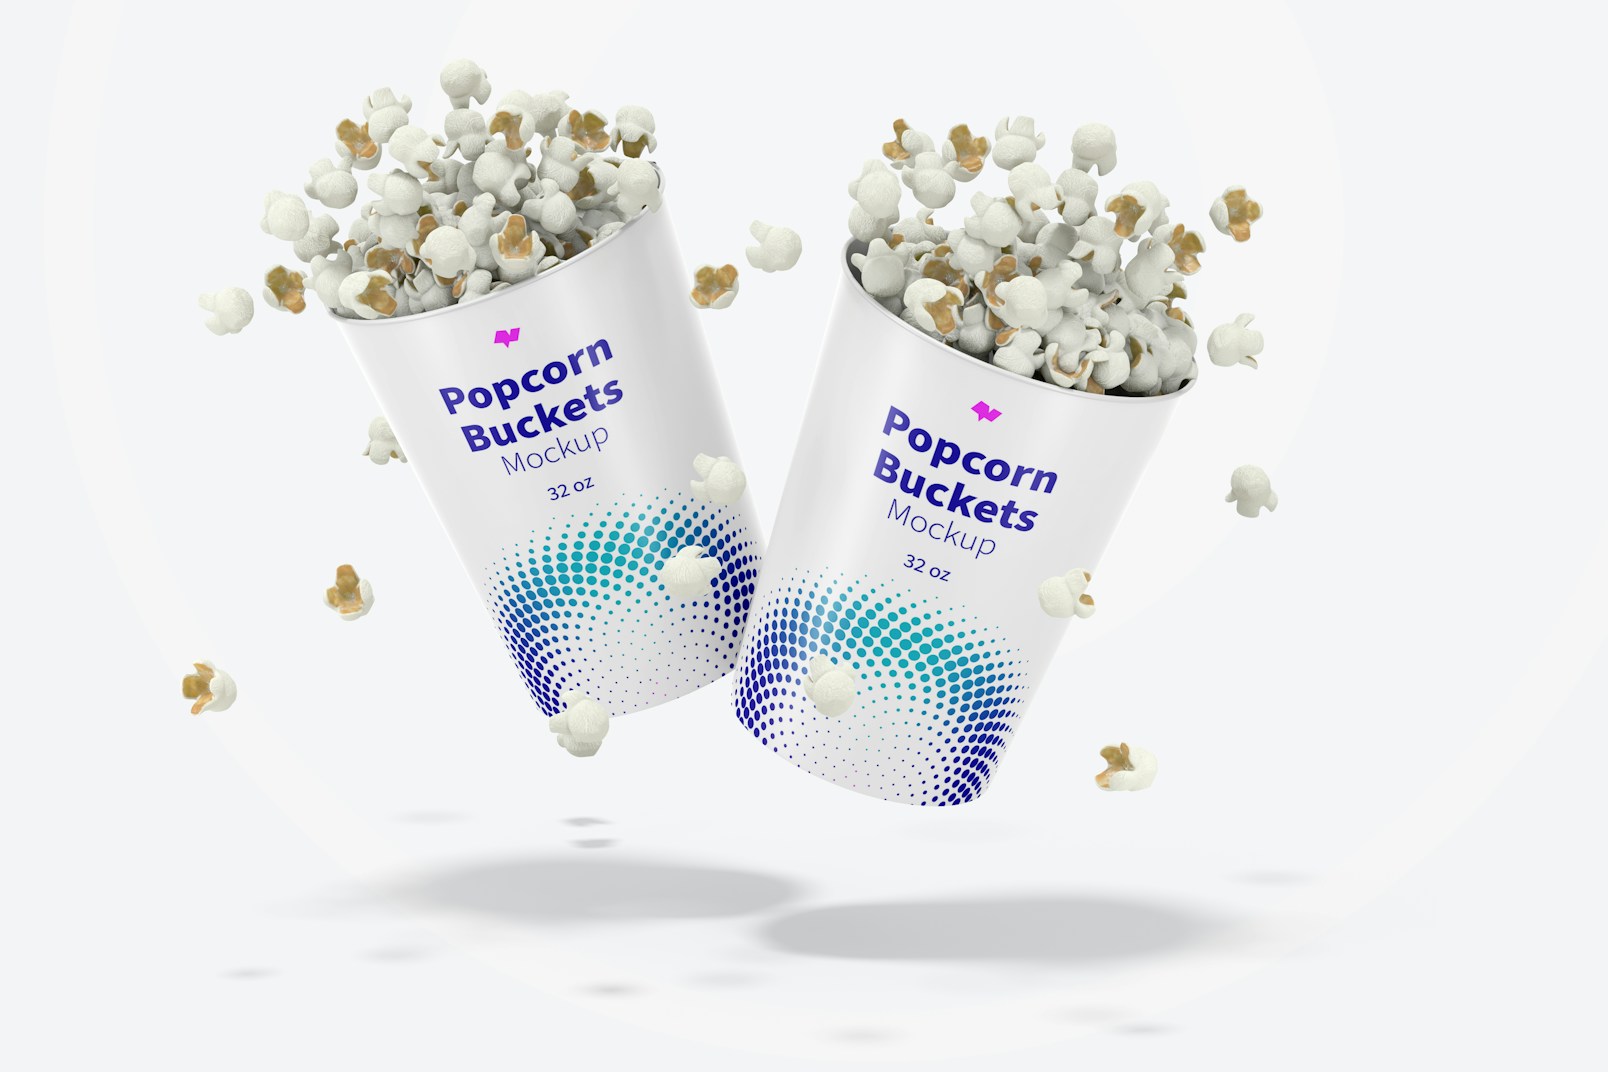 32 oz Popcorn Buckets Mockup, Falling